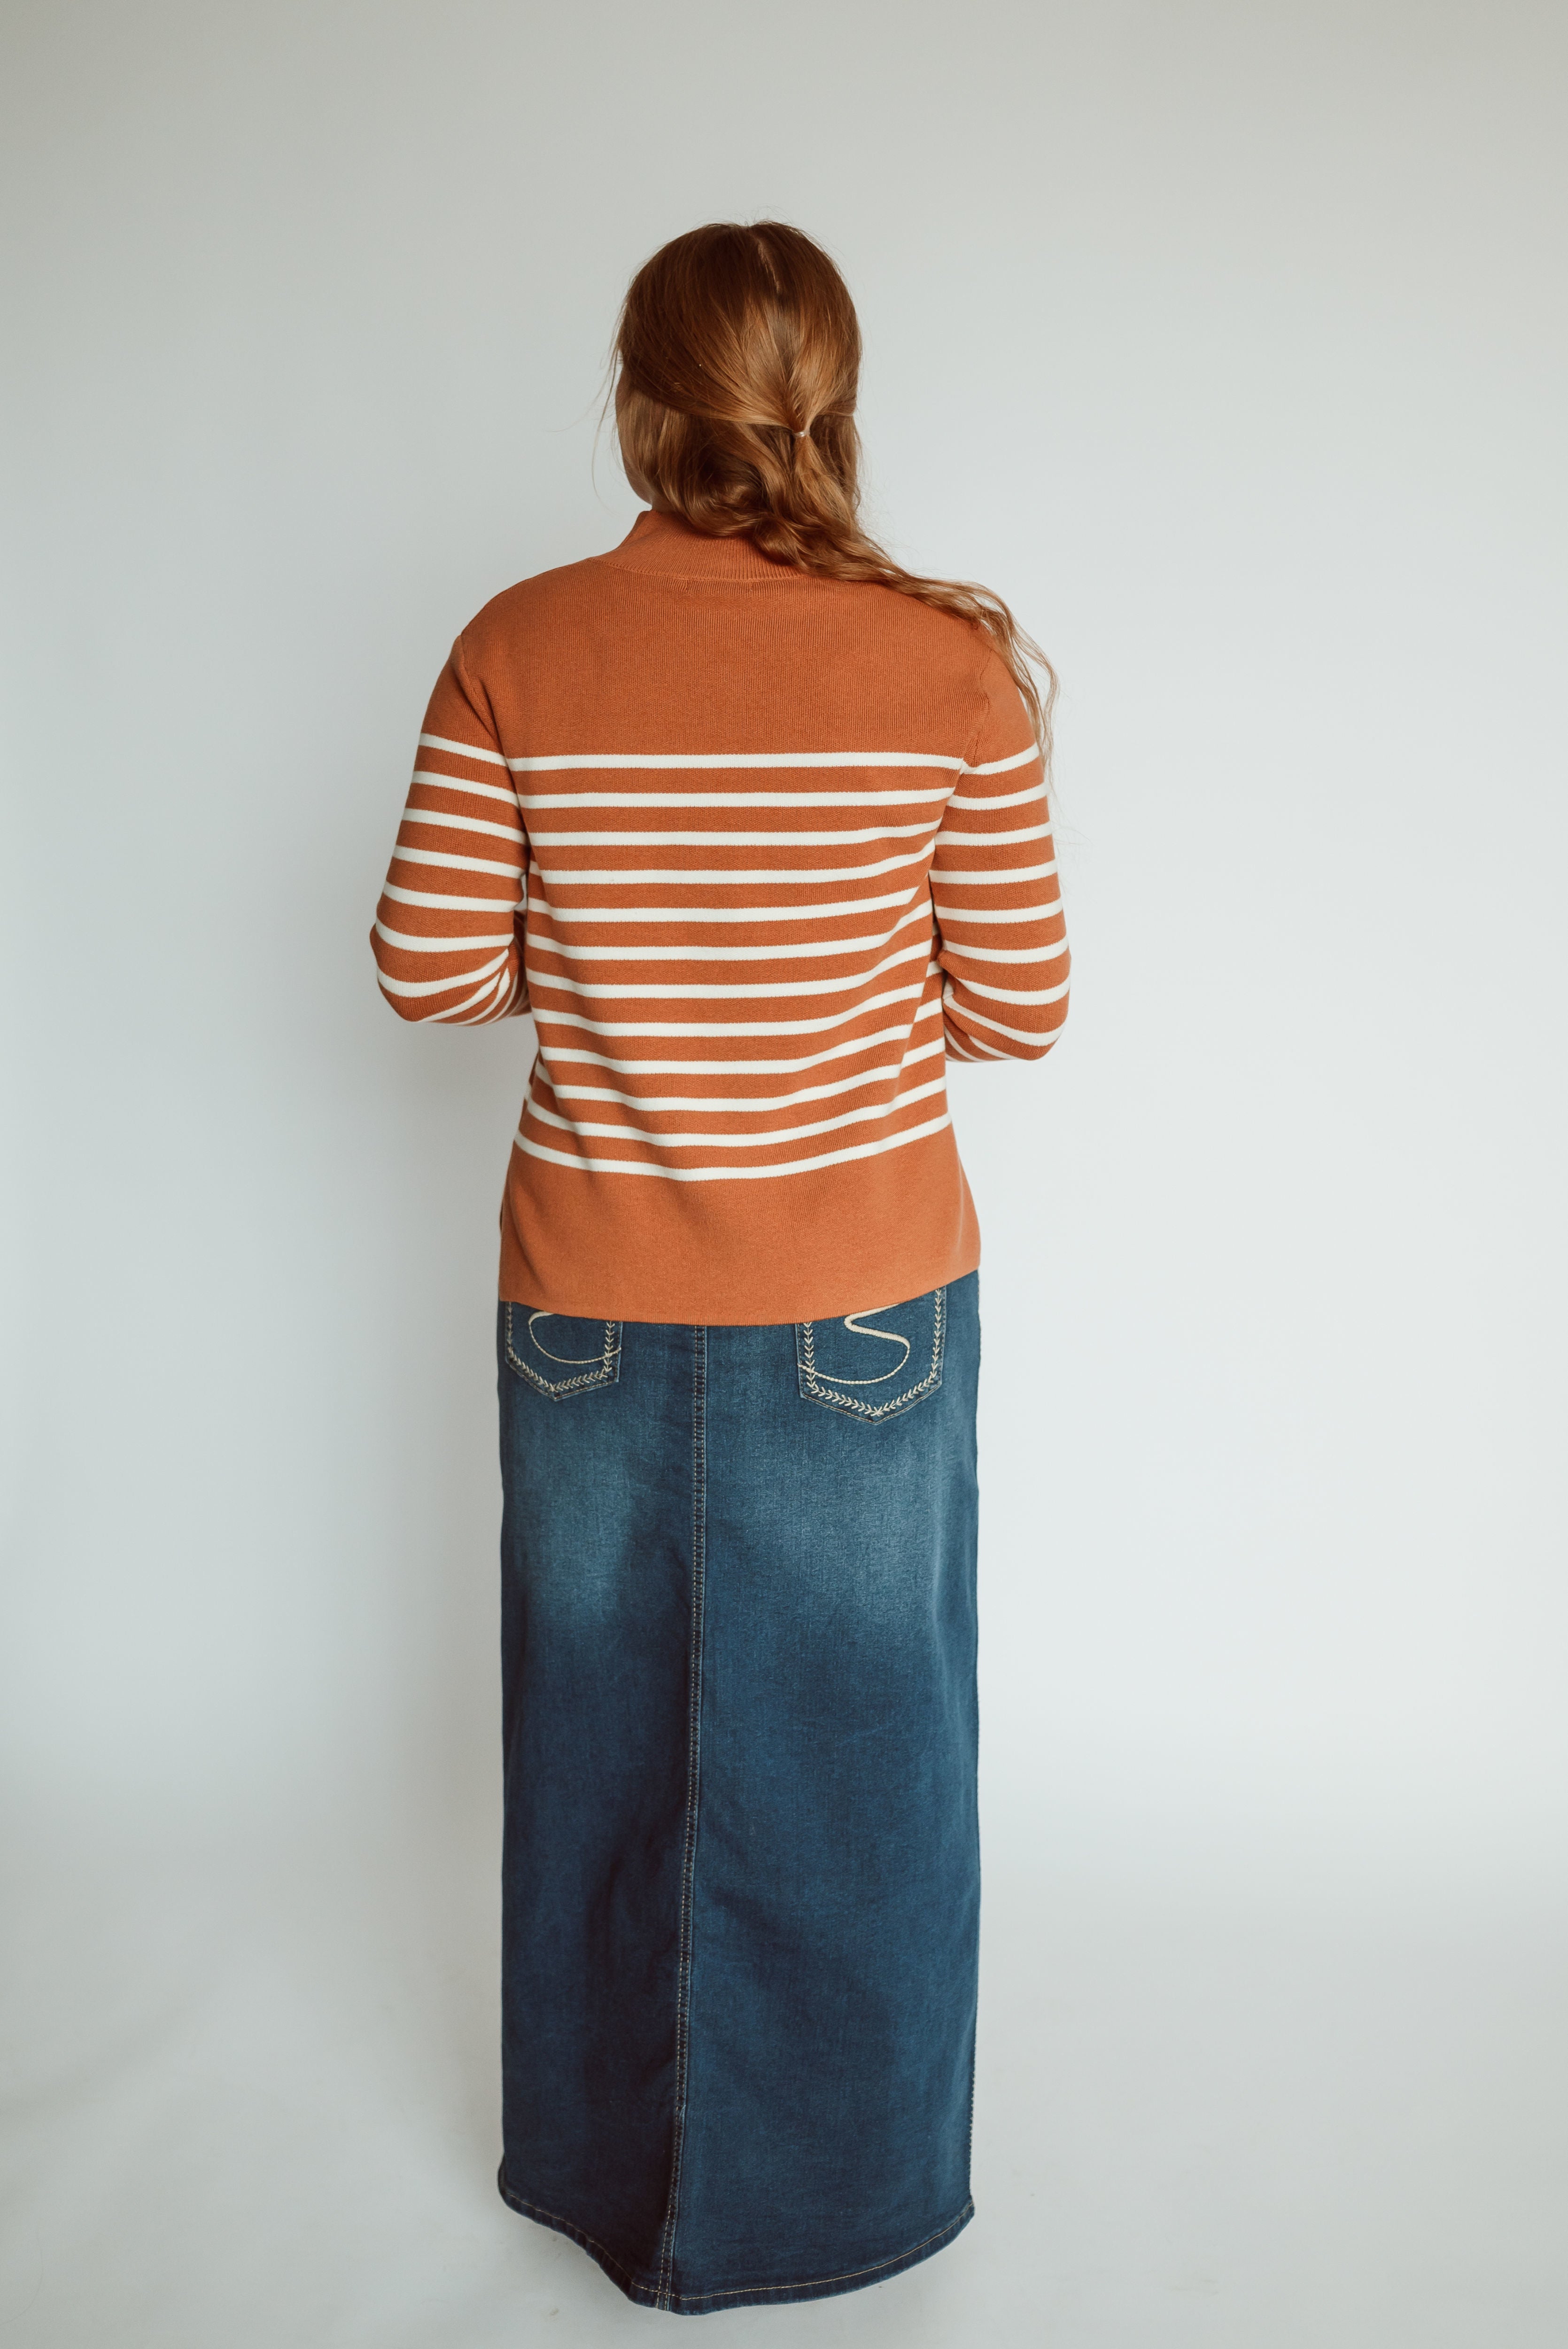 Jasmine Sweater in Camel/White Stripes